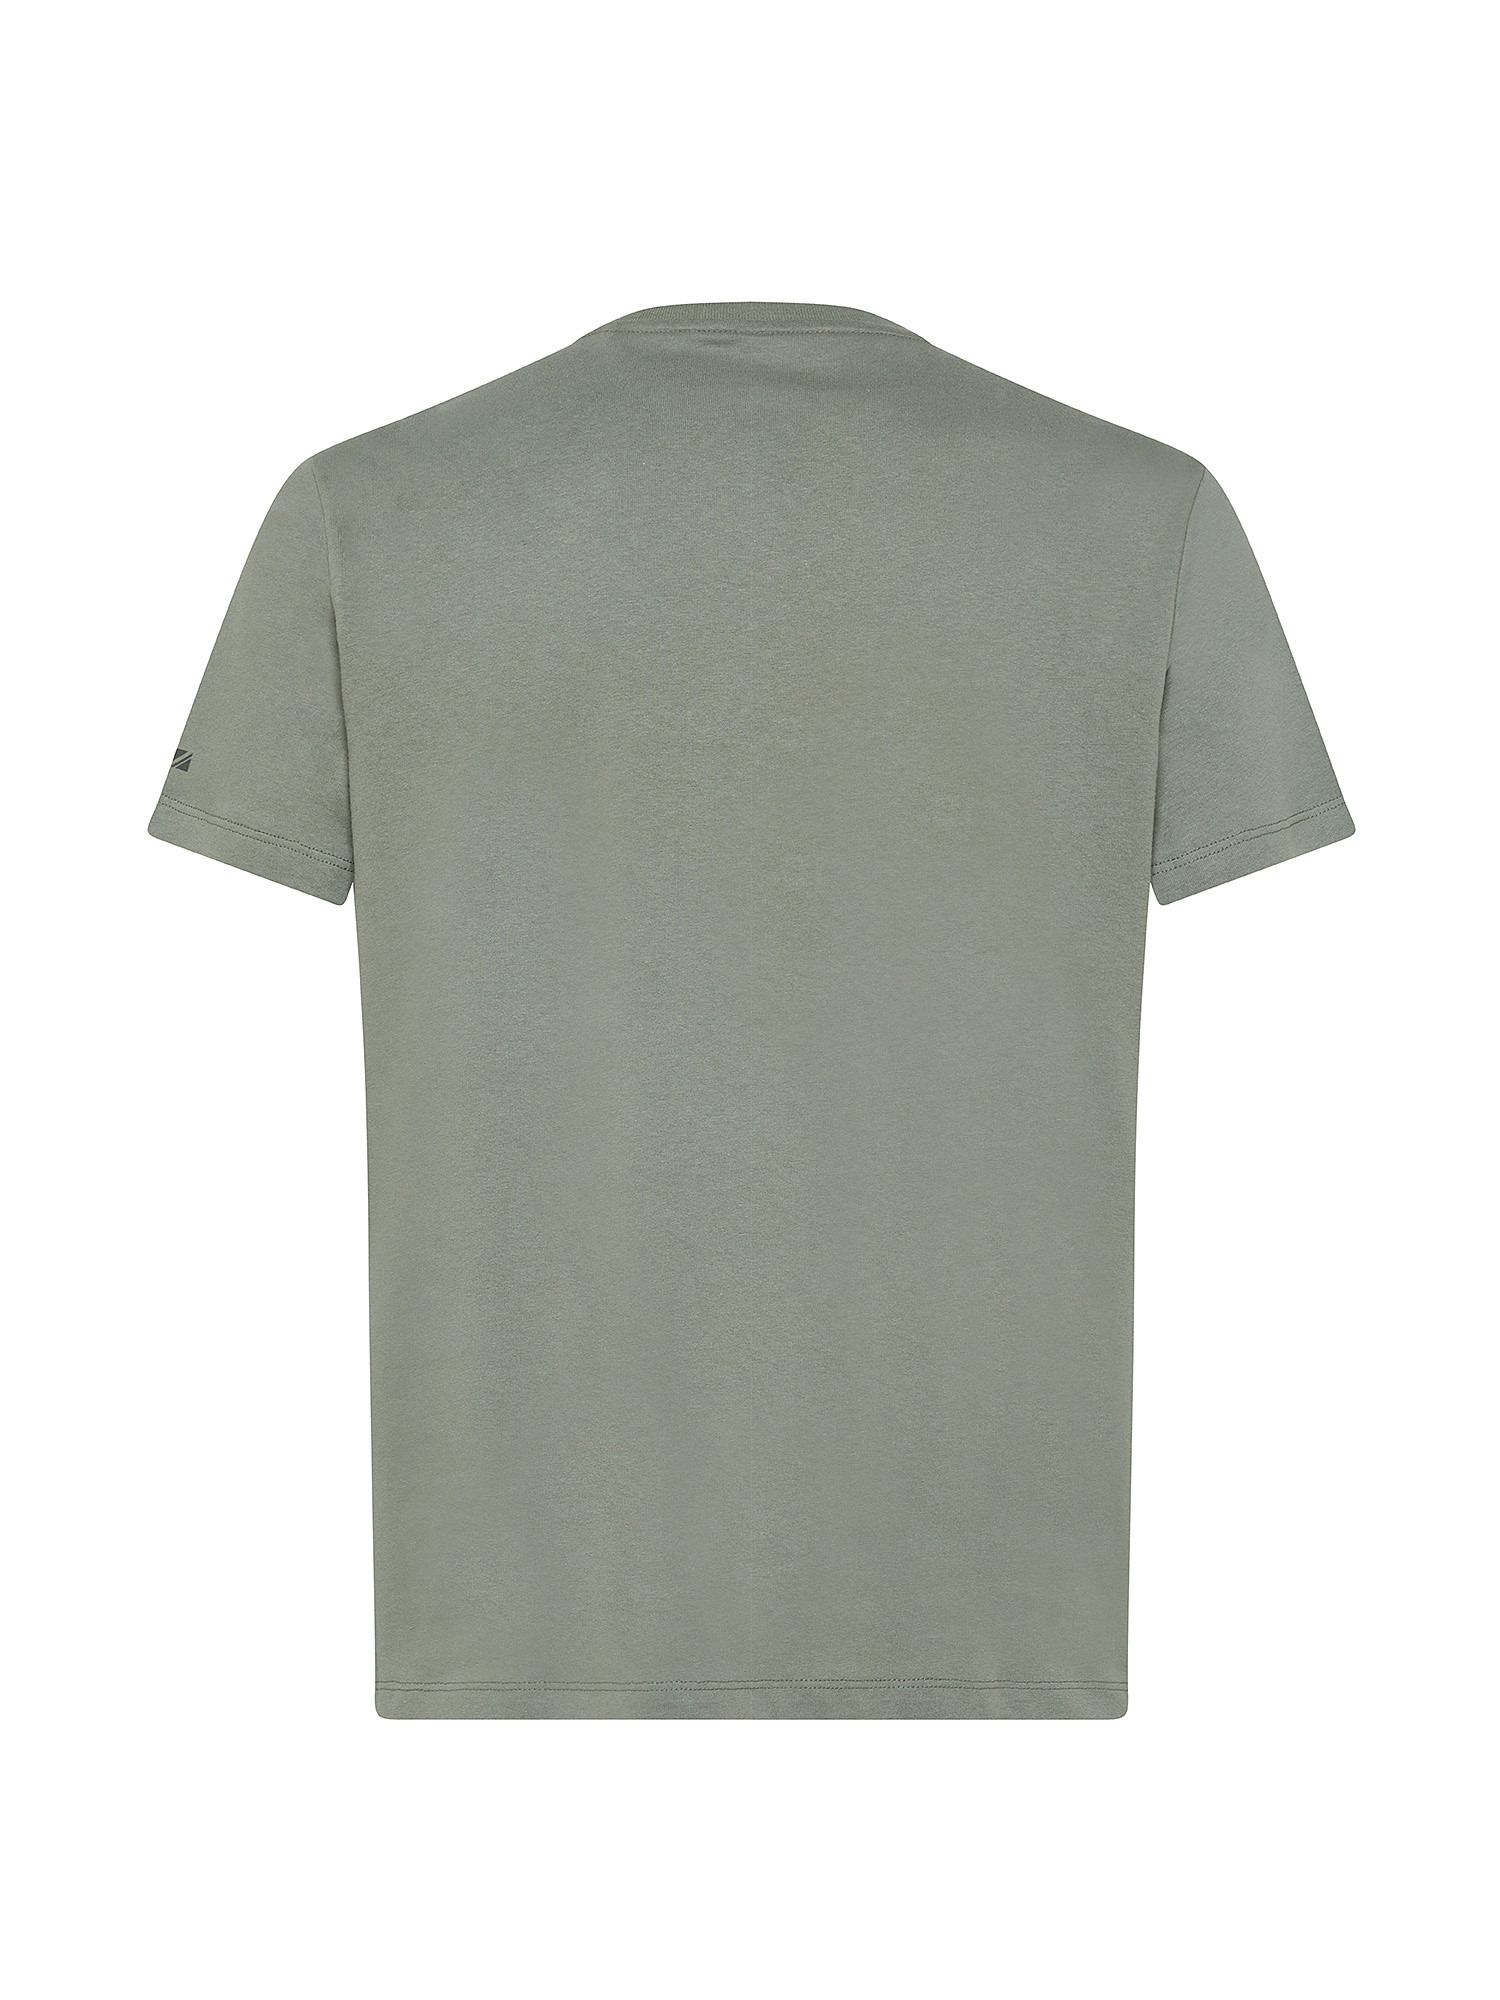 Pepe Jeans - Cotton logo T-shirt, Light Green, large image number 1